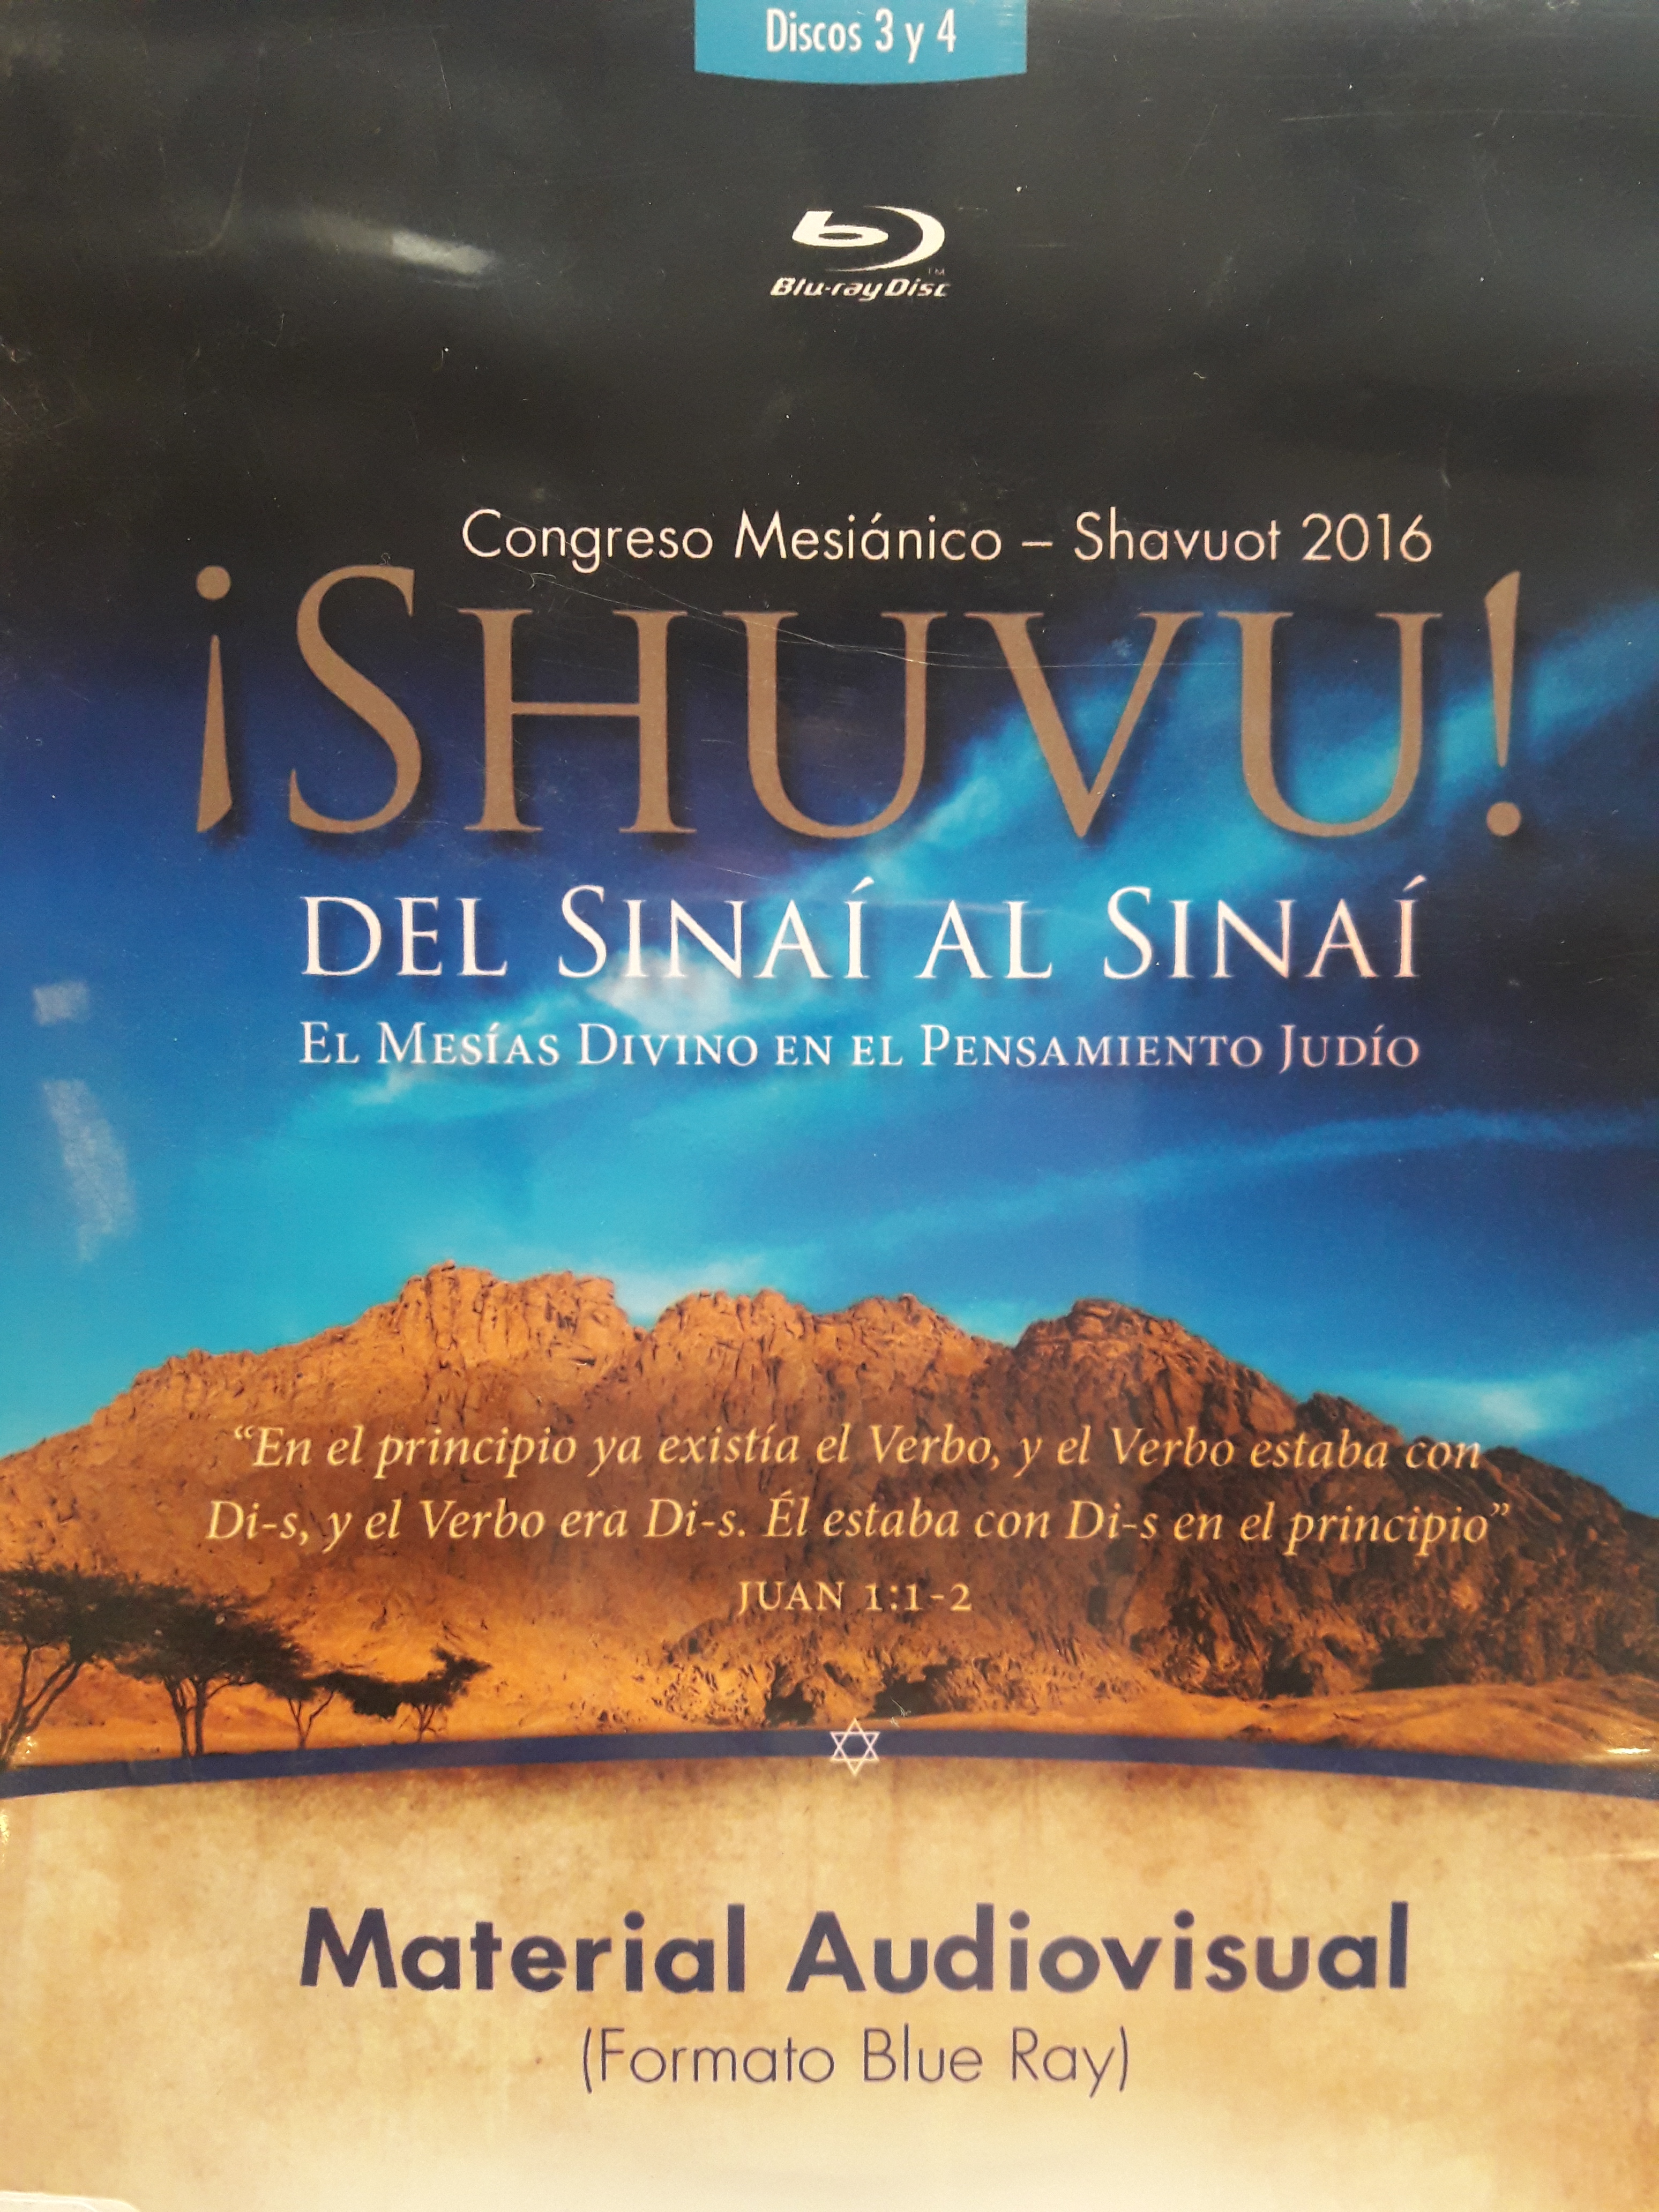 Congreso mesiánico Shavuot 2016: Shuvu, del Sinaí al Sinaí  disco 3-4 [Videodisco digital]